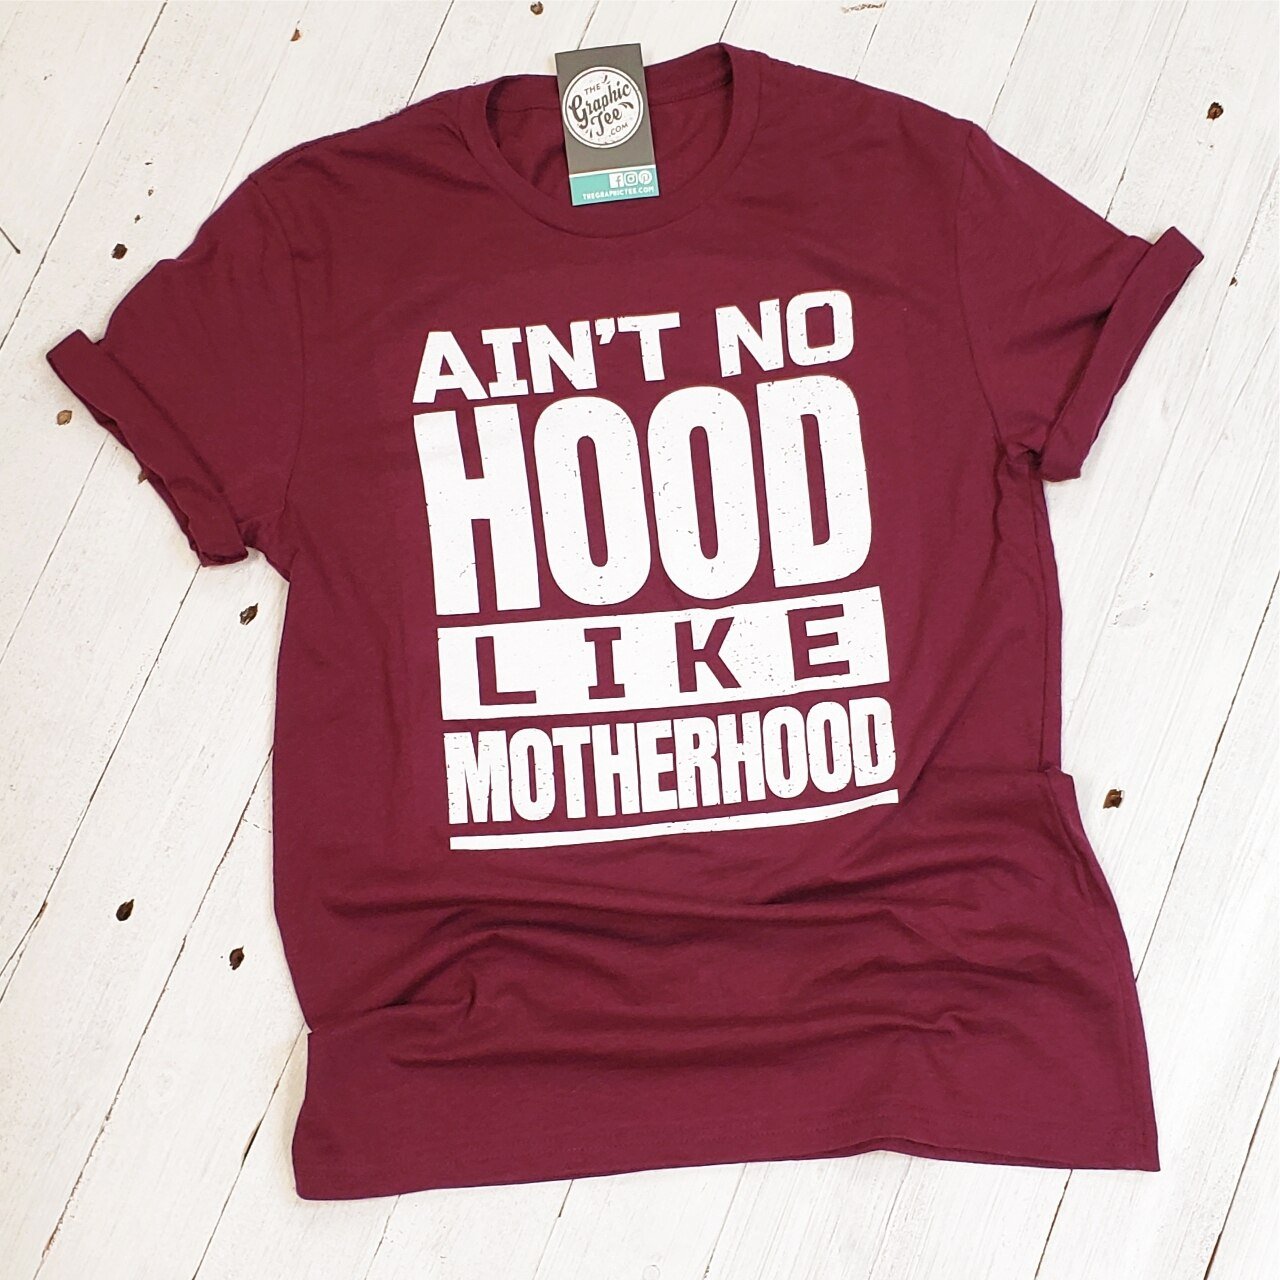 Ain't No Hood Like Motherhood - Adult Tee - The Graphic Tee